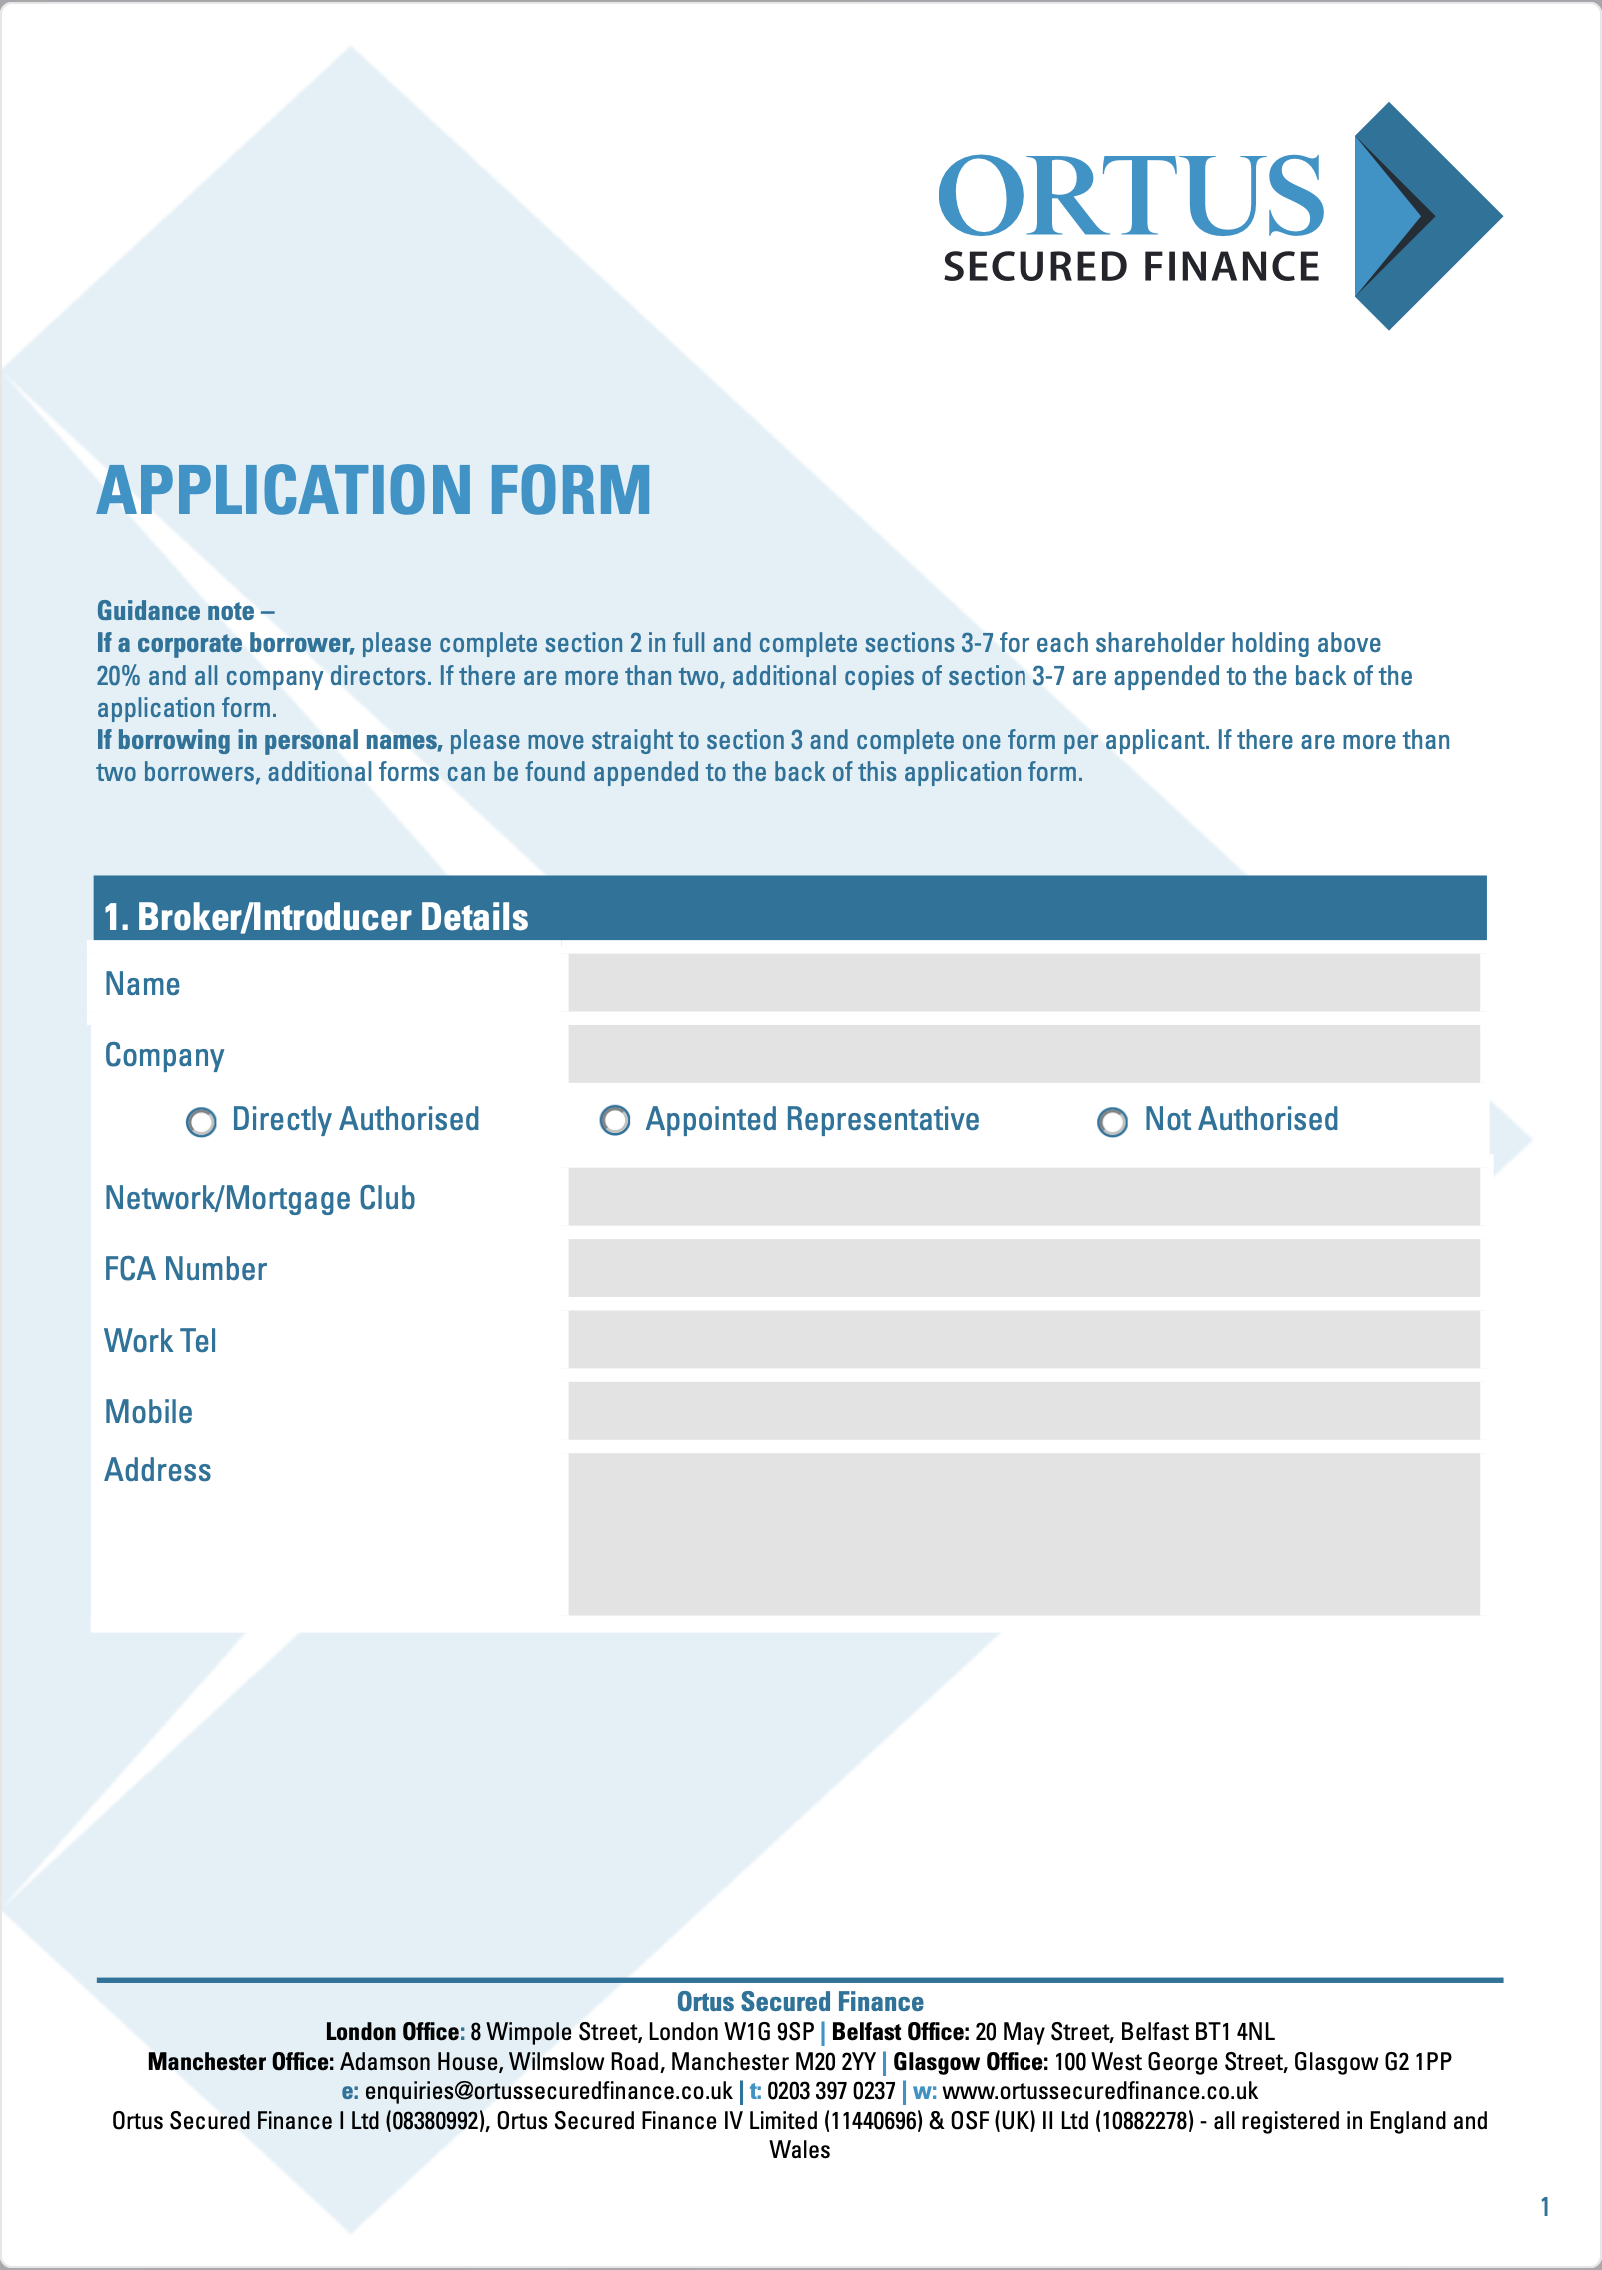 Ortus Application Form